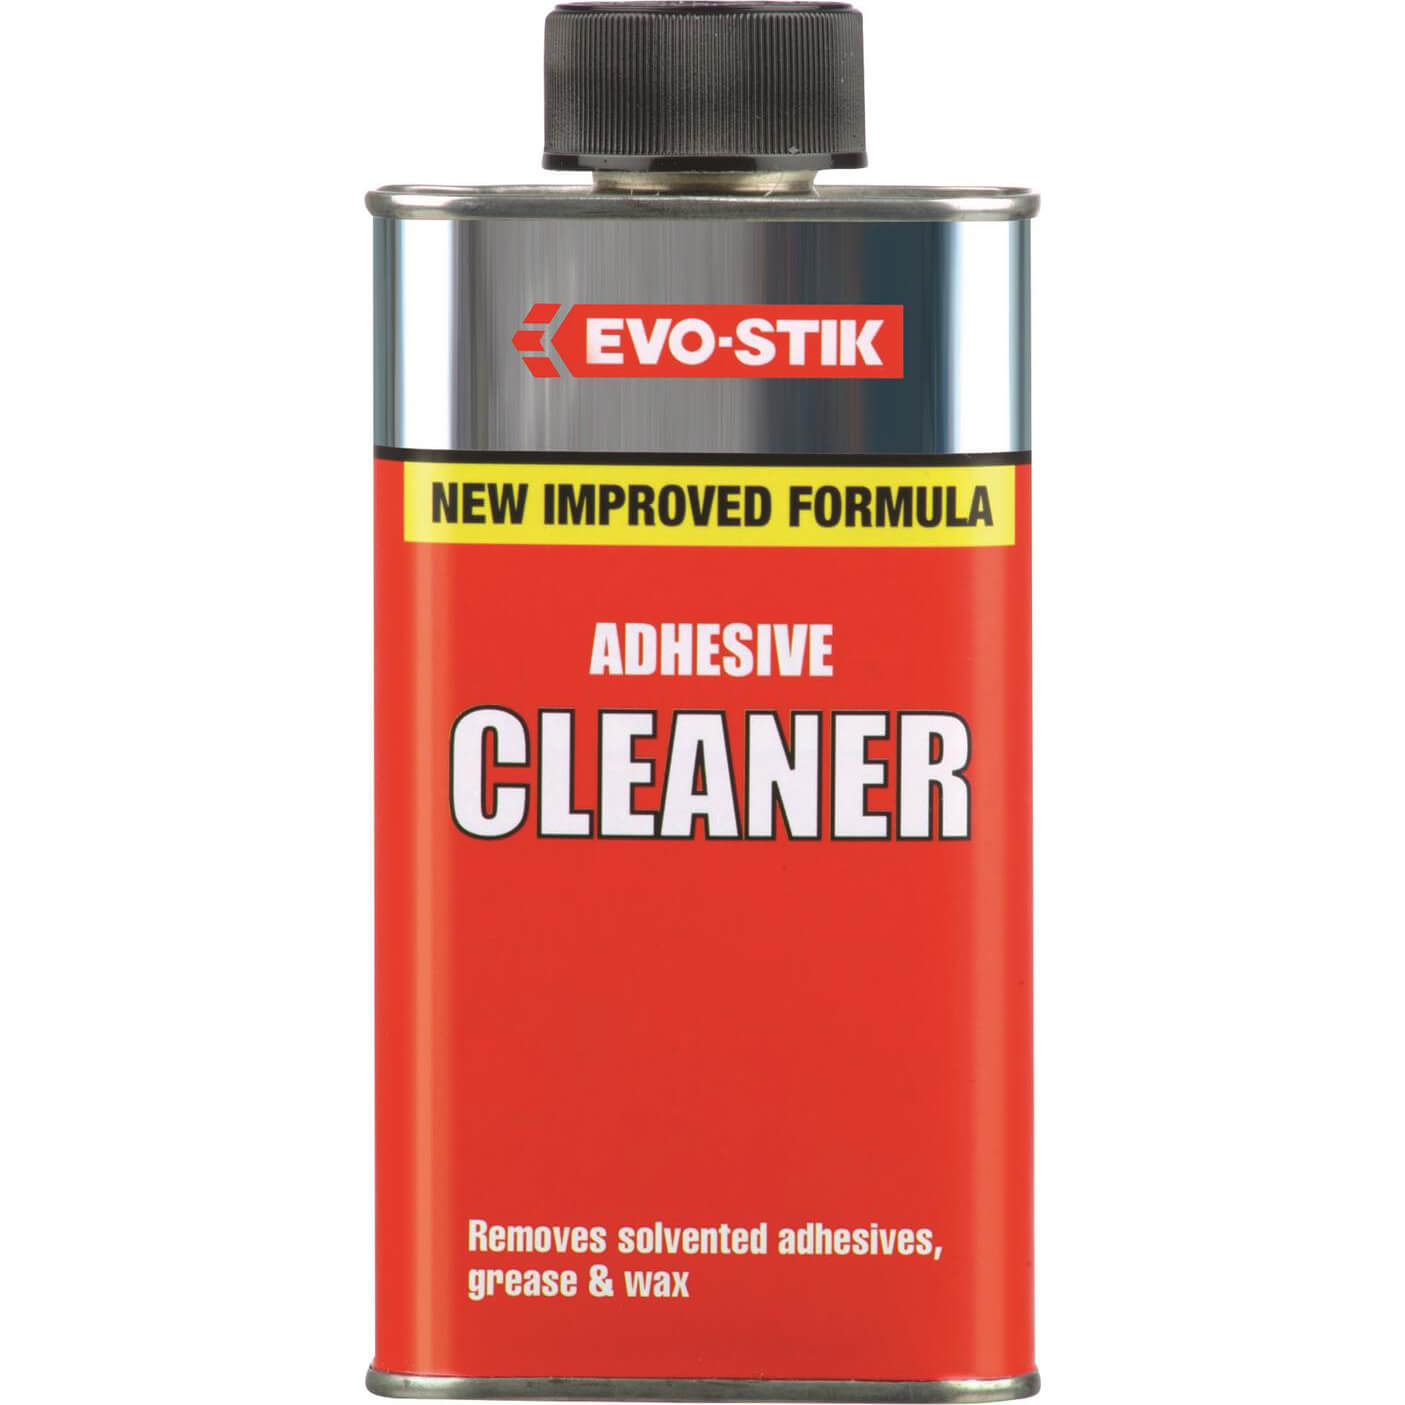 Image of Evo-stik 191 Adhesive Cleaner 250ml